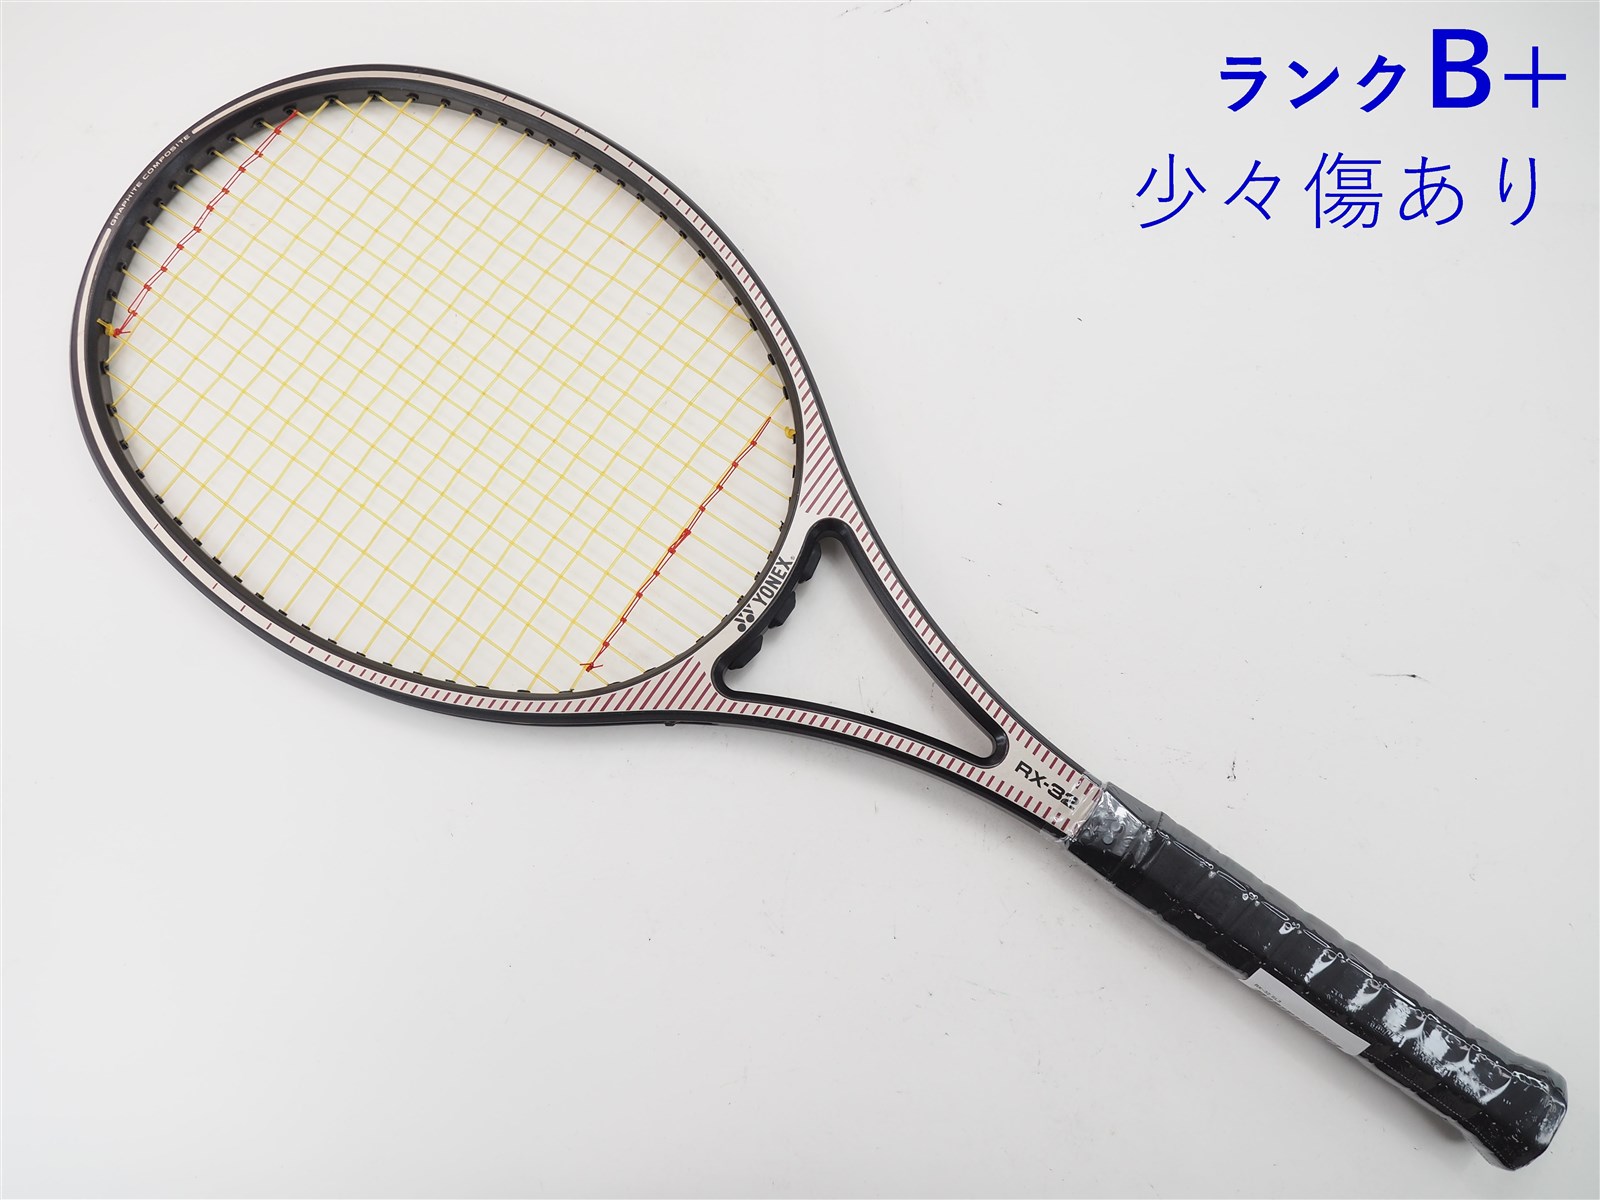 YONEX REXKING 22 24 RX-32 硬式用 テニス ラケット - ラケット(硬式用)